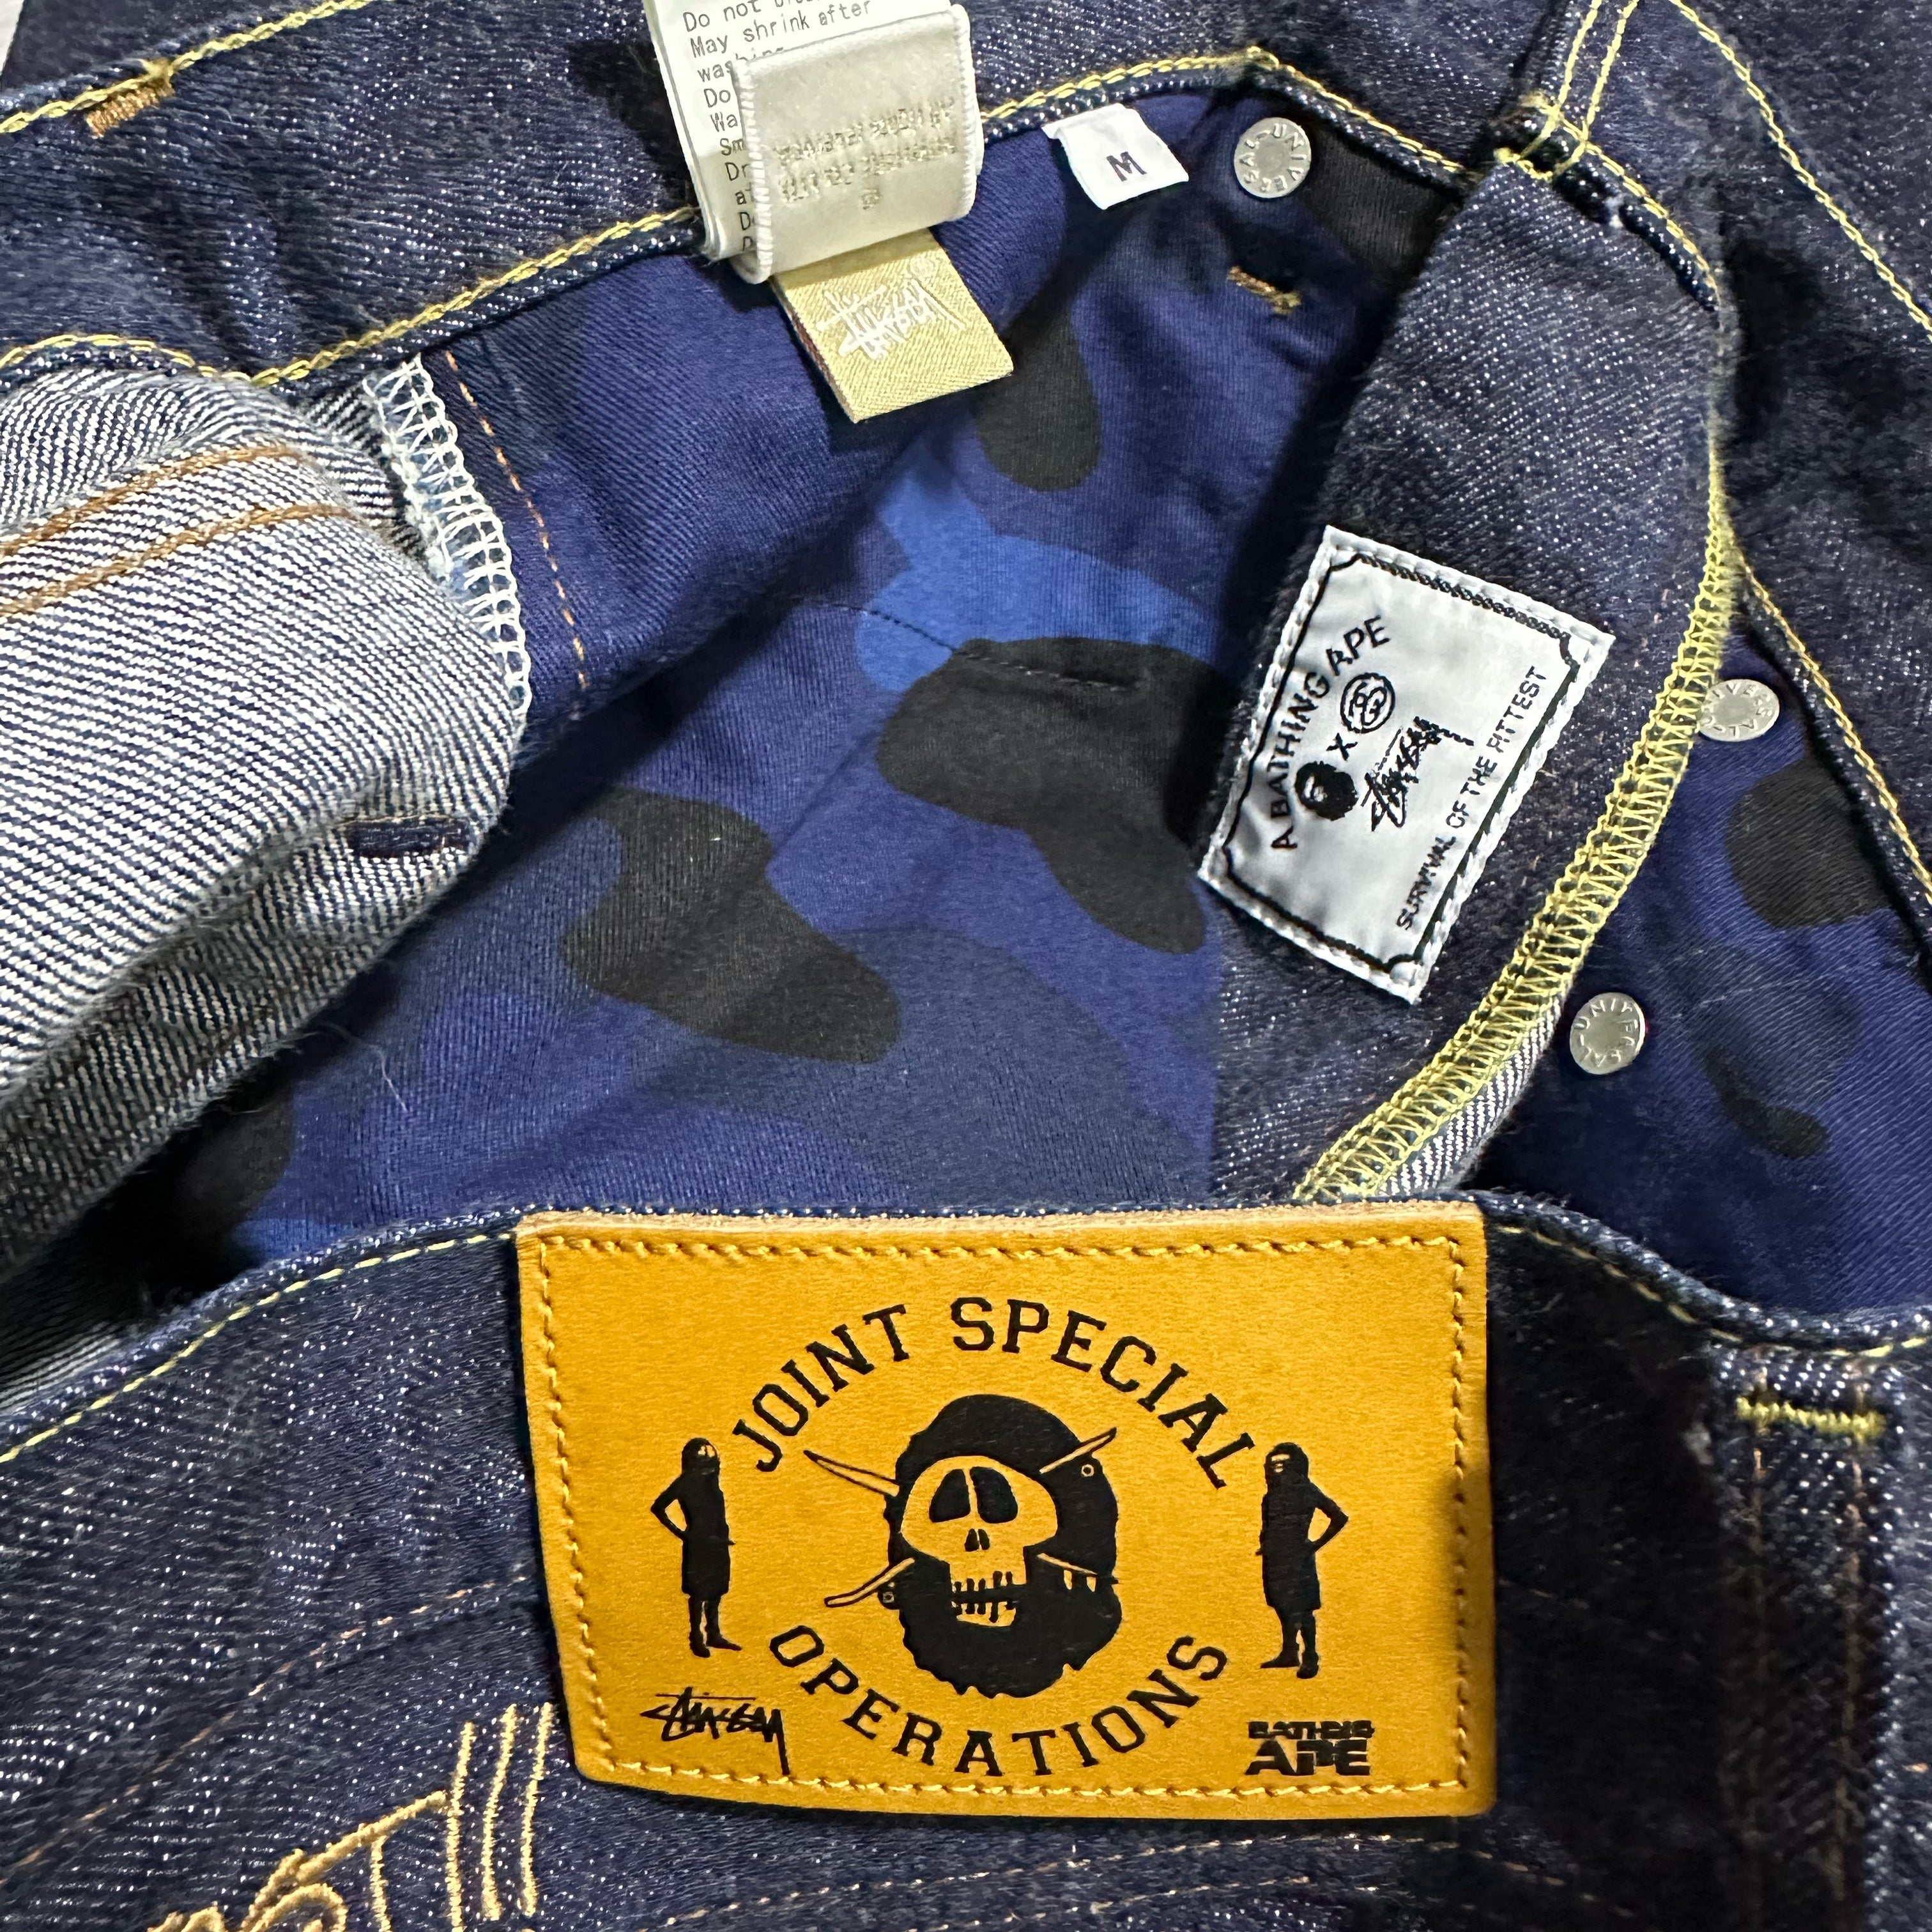 Stussy x Bape Contrast Stitching Logo Denim Jeans